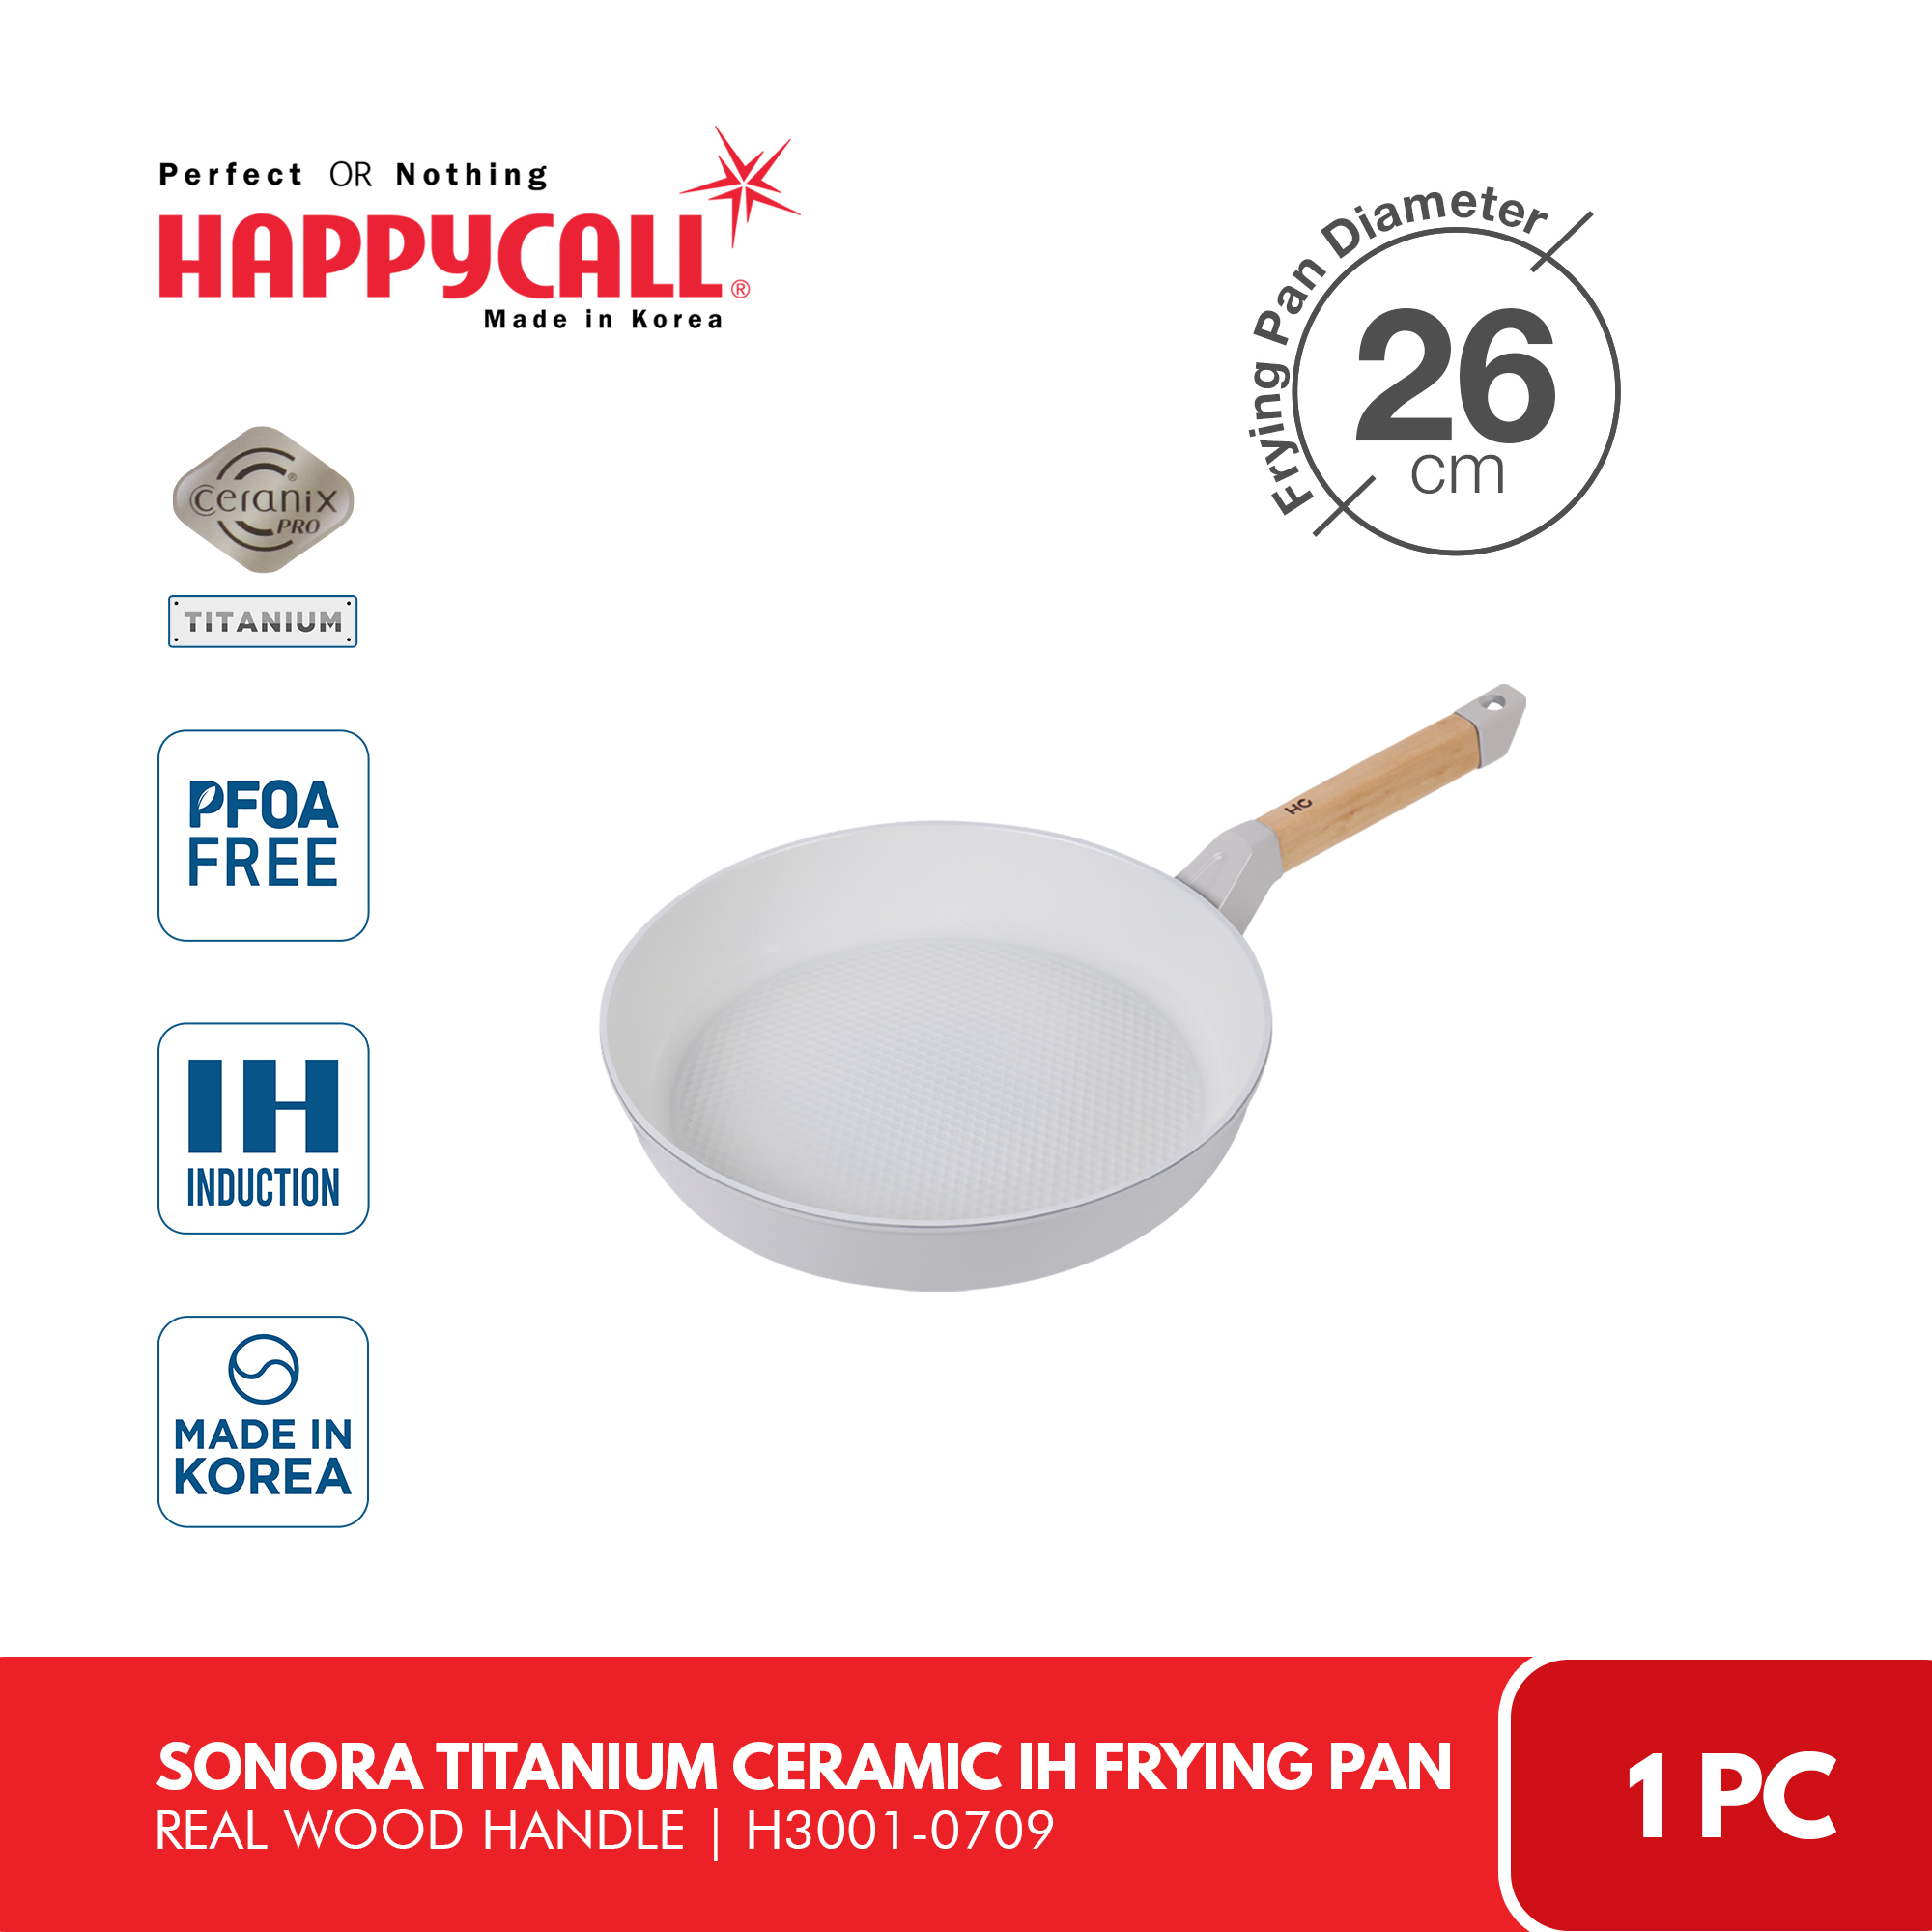 Happycall Titanium Frying Pan Review (Plasma IH) - Souper Diaries